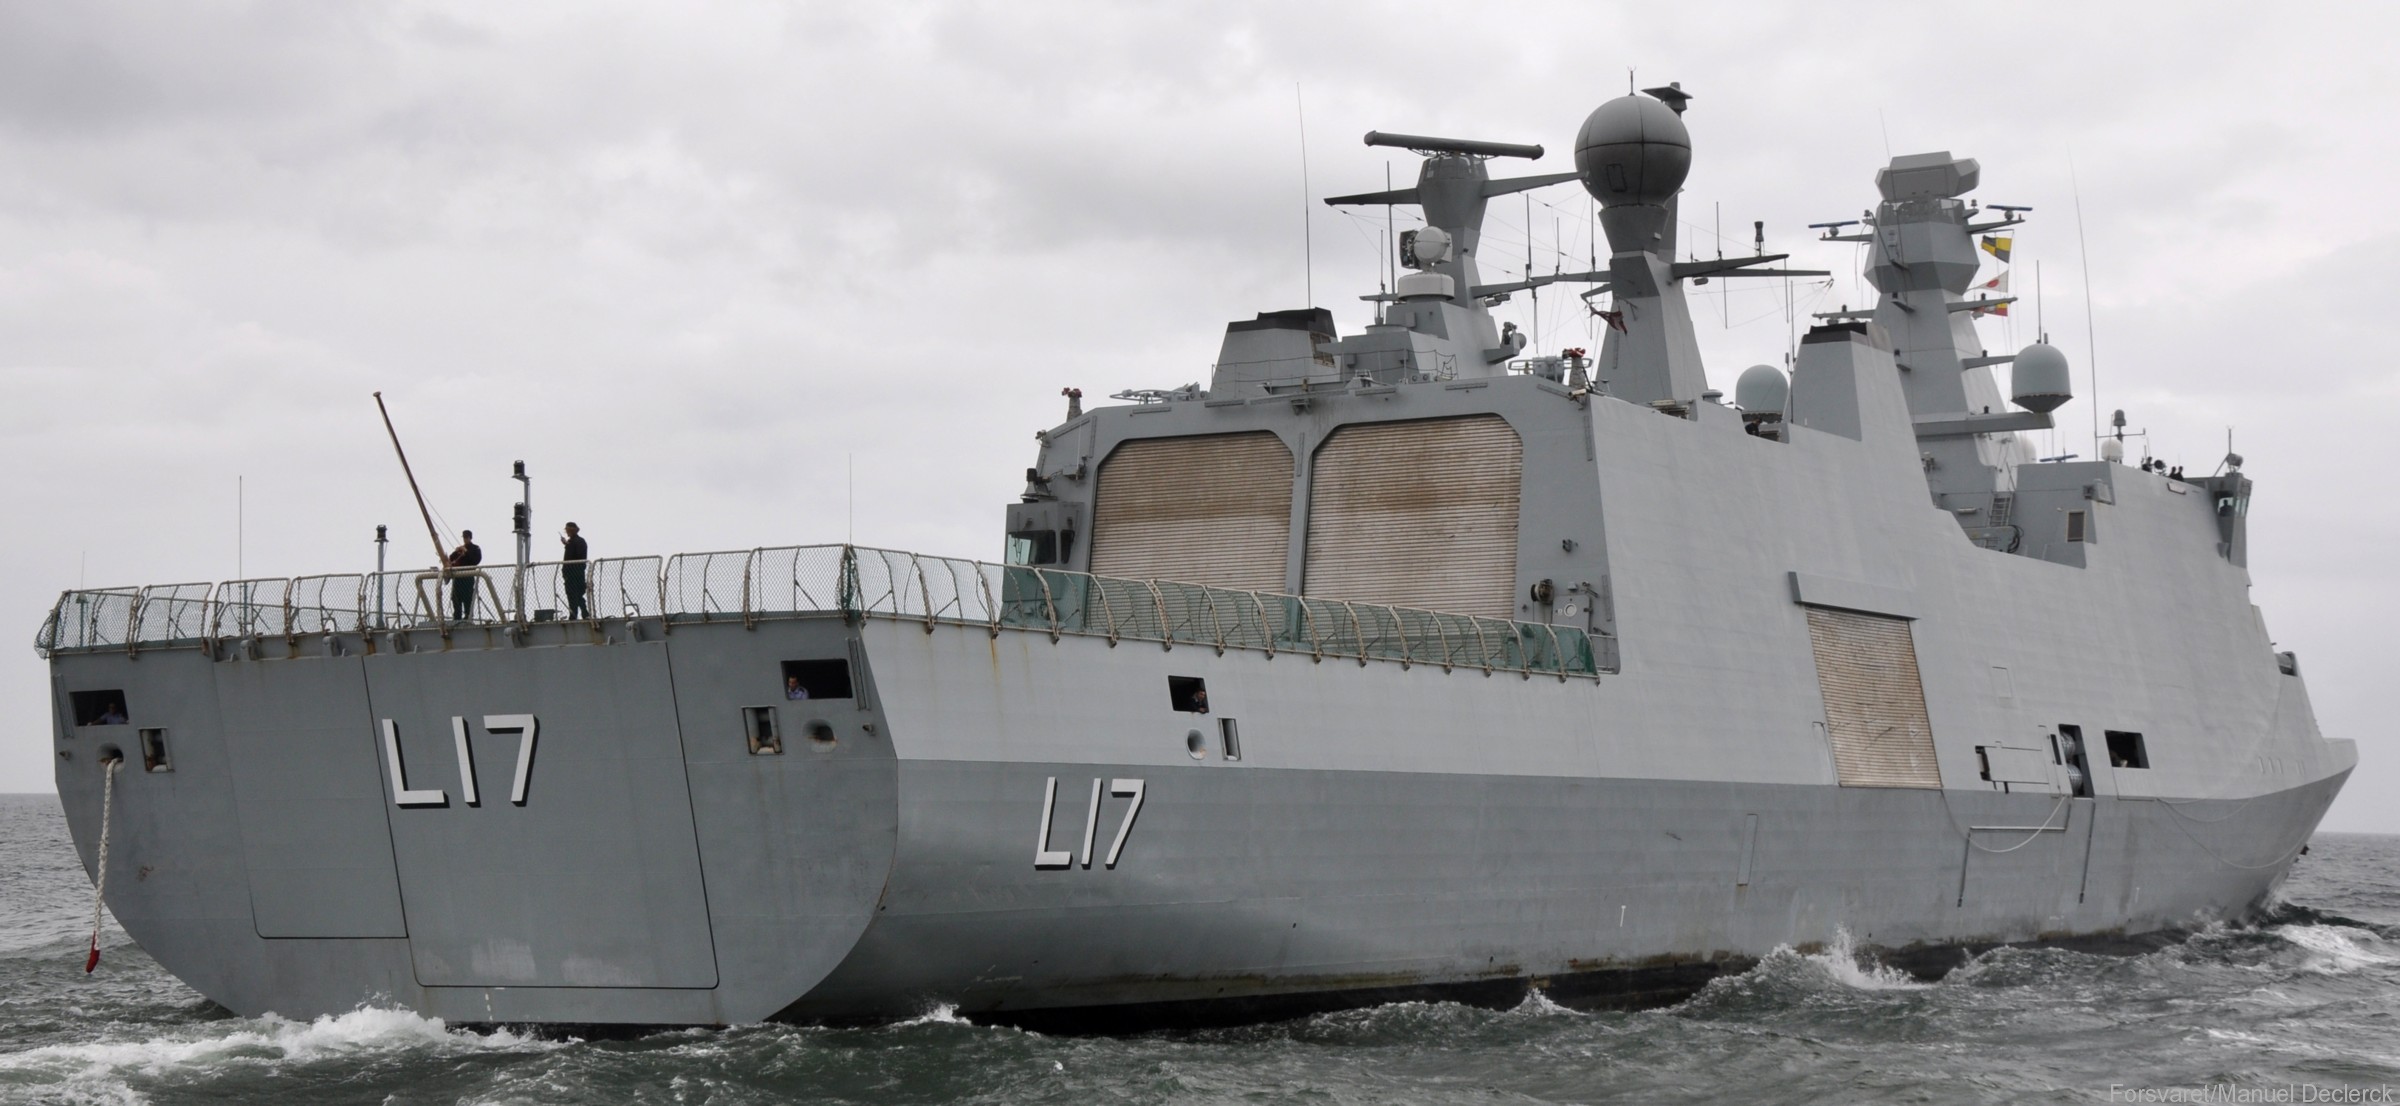 f-342 hdms esbern snare l-17 frigate command support ship royal danish navy 46